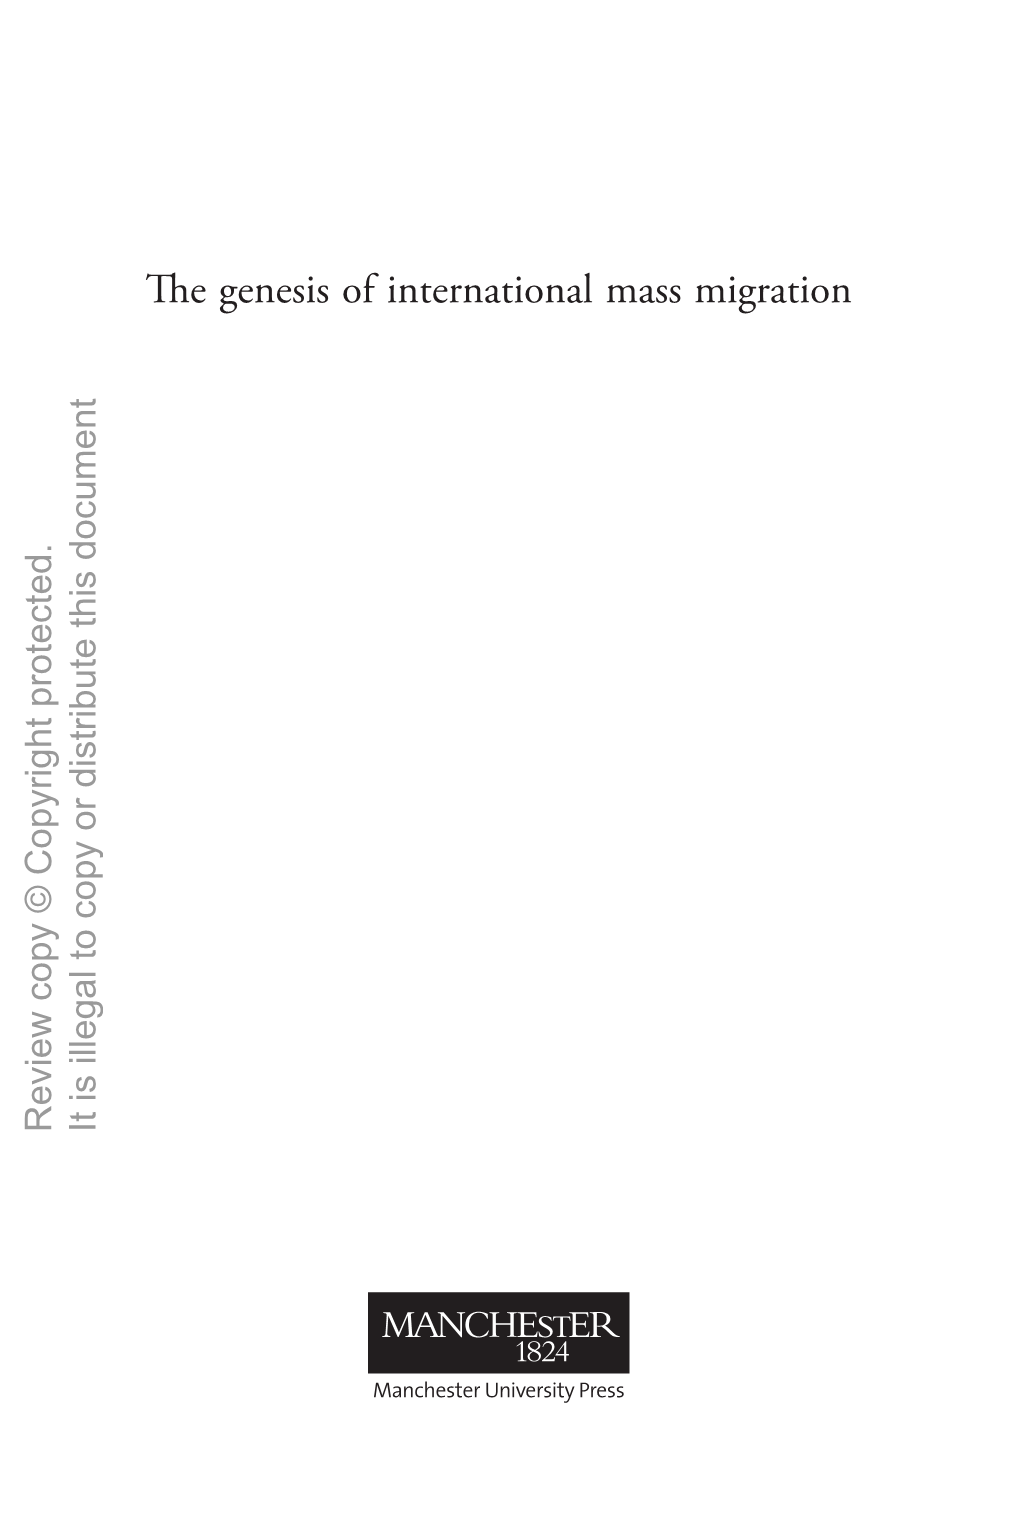 The Genesis of International Mass Migration